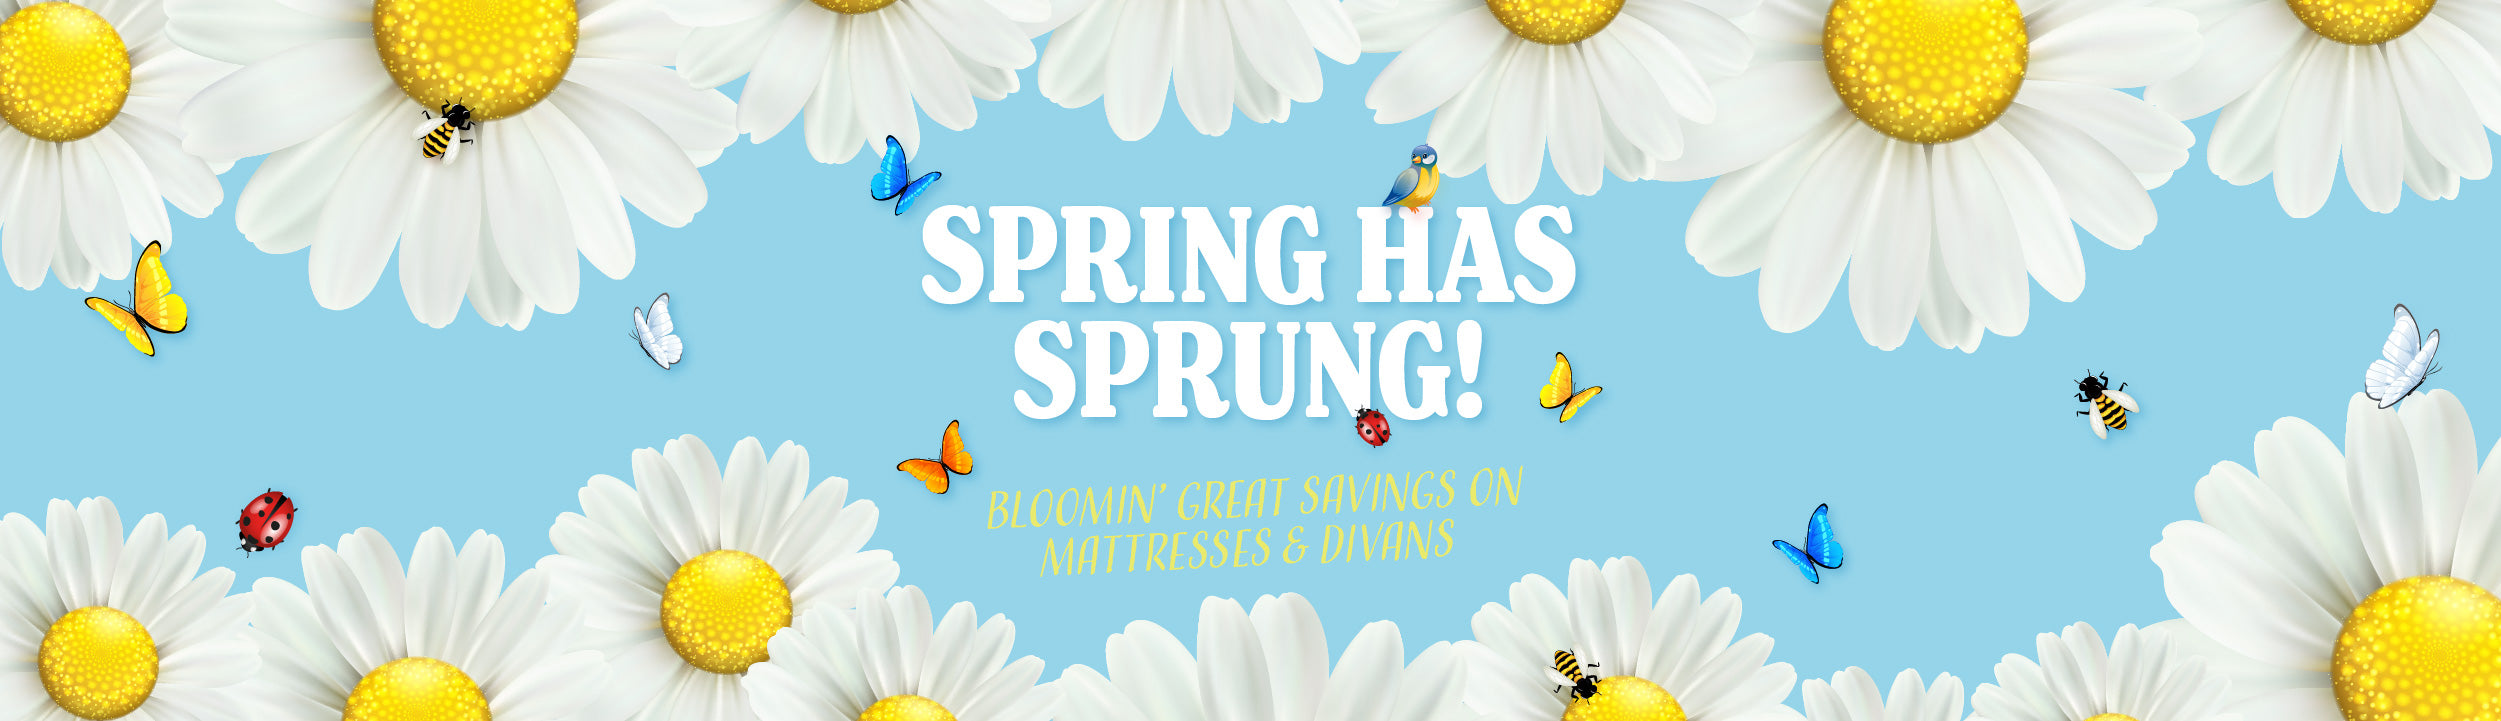 Spring Has Sprung! Bloomin' Great Savings On Mattresses & Divans